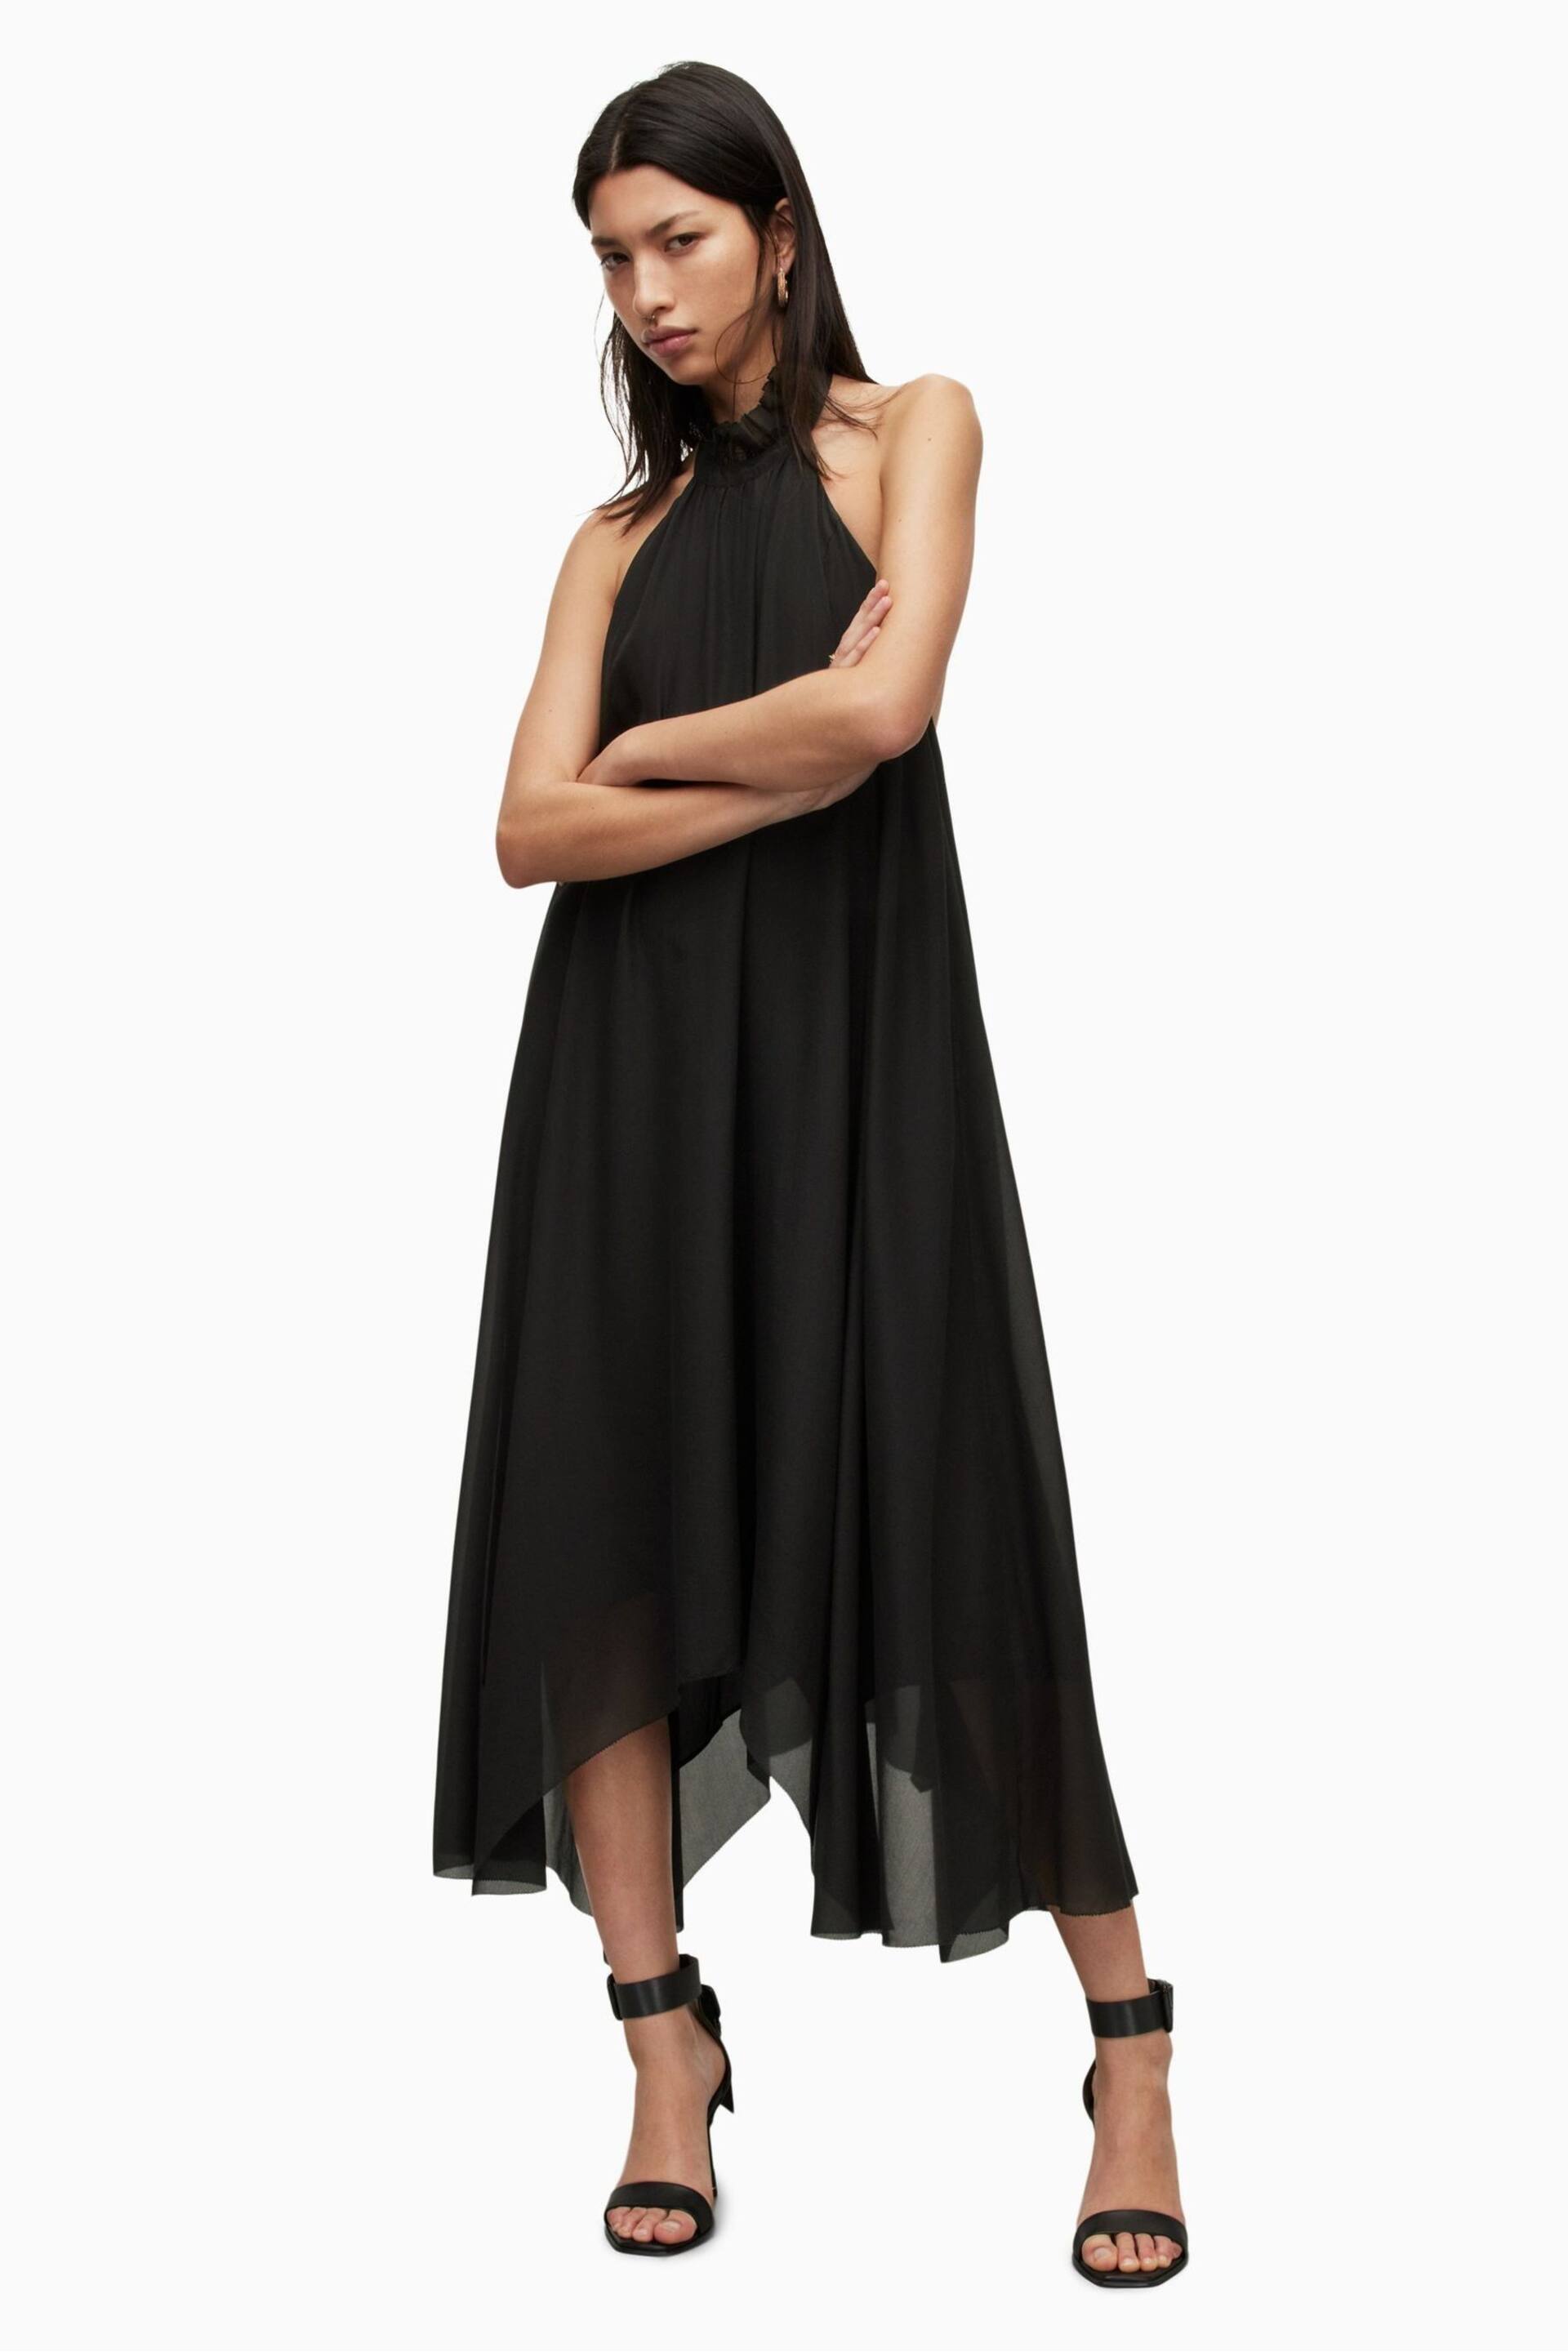 AllSaints Black Alaya Dress - Image 1 of 7